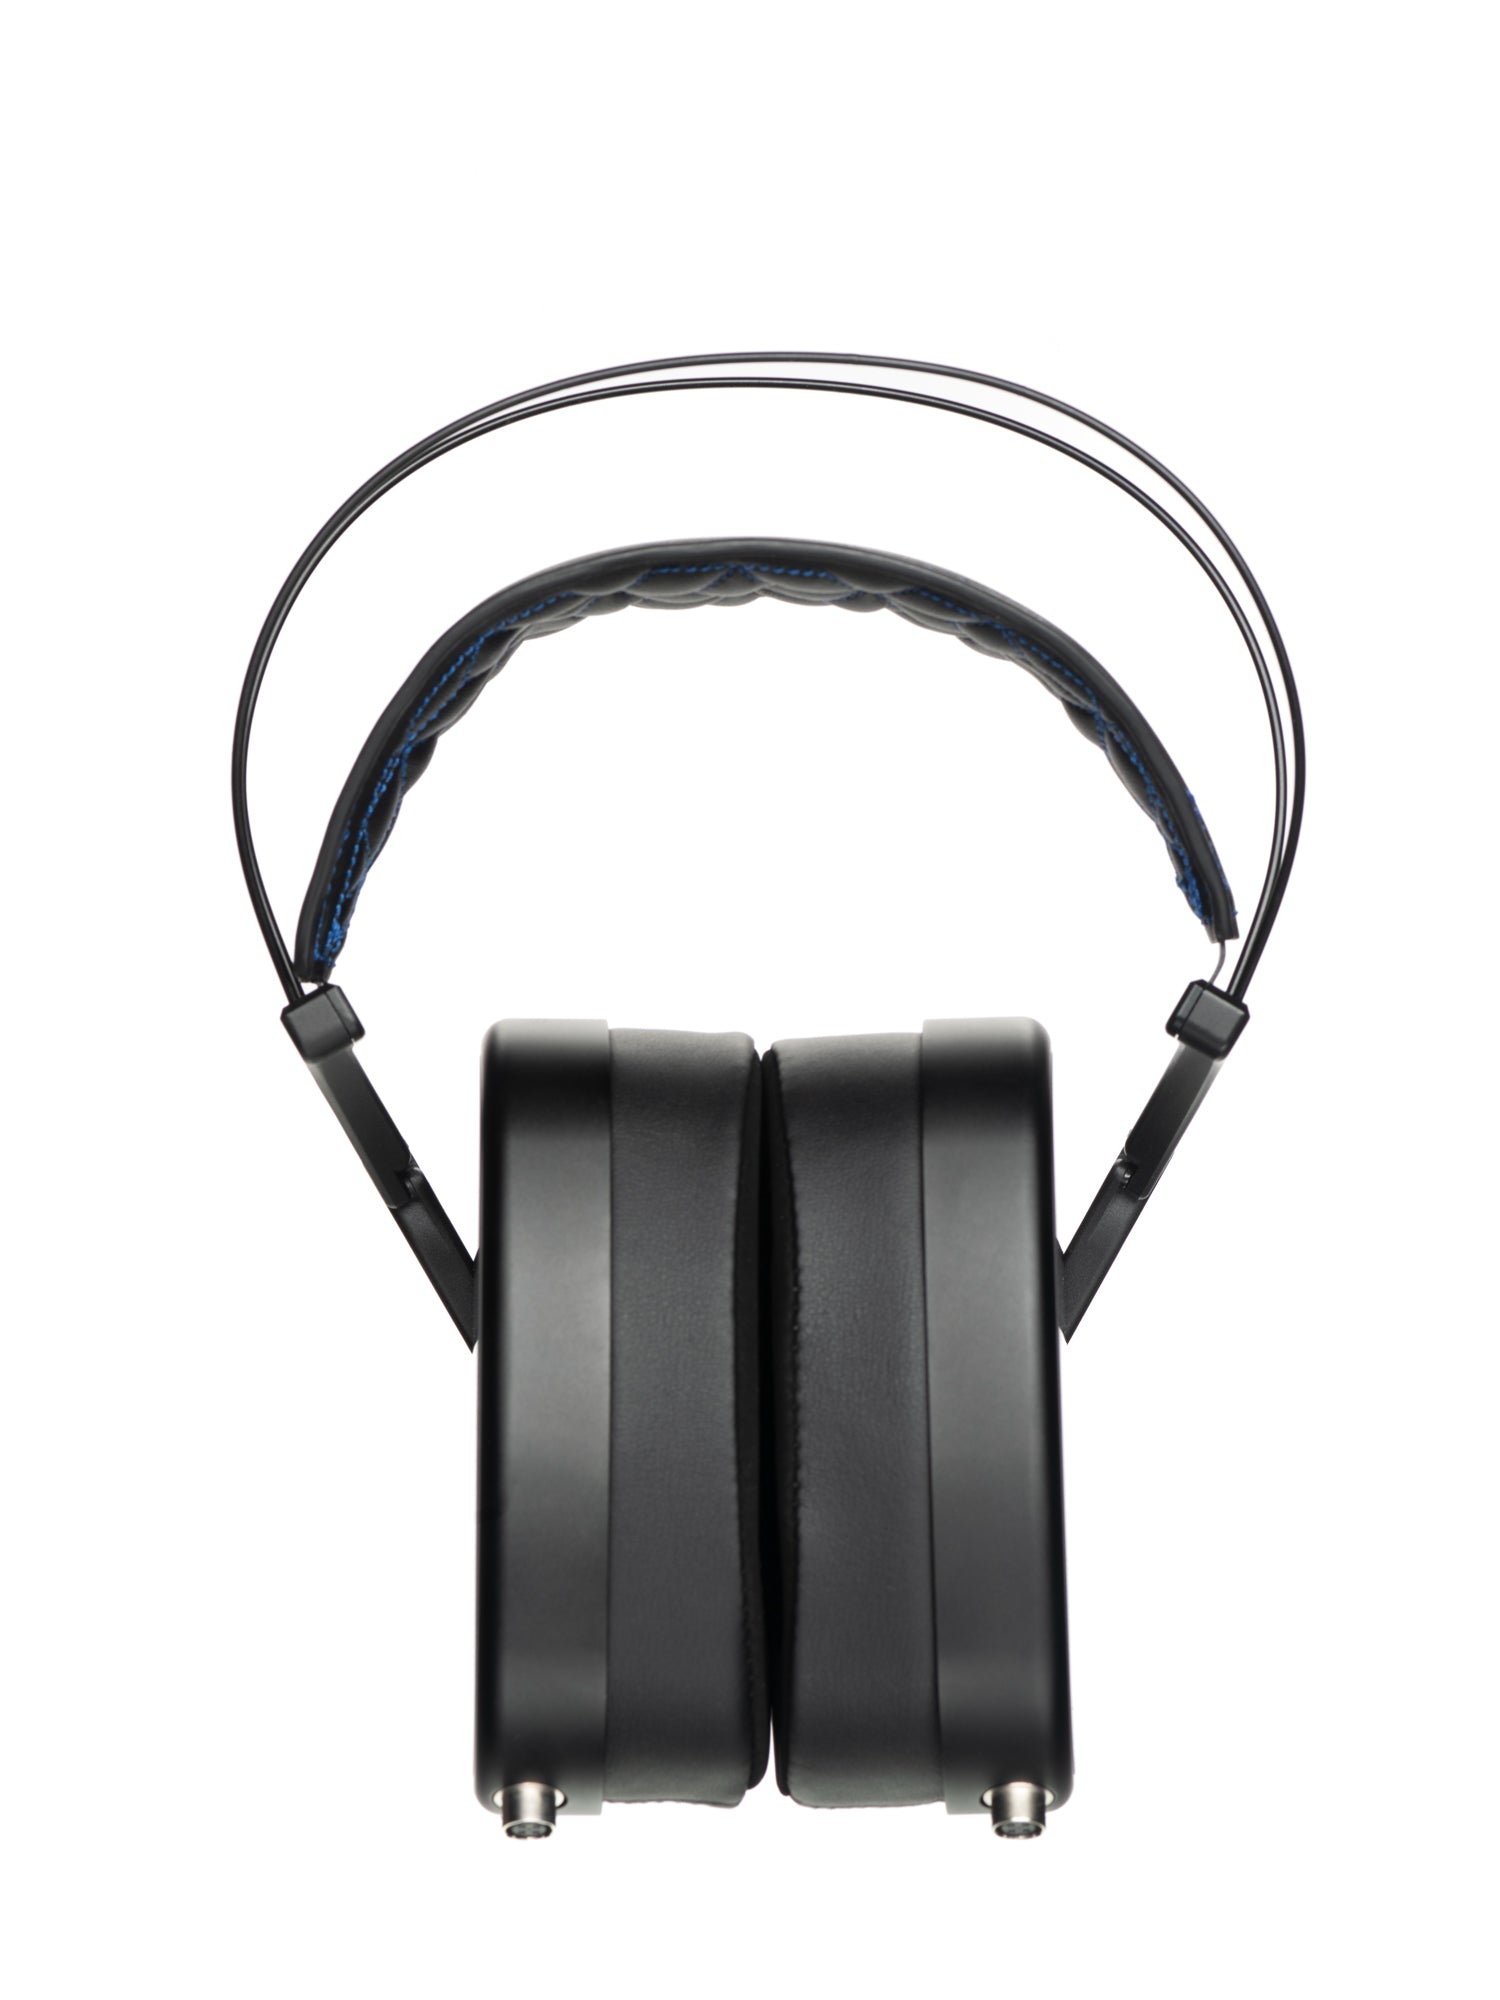 Dan Clark Audio E3 CLOSED Headphones